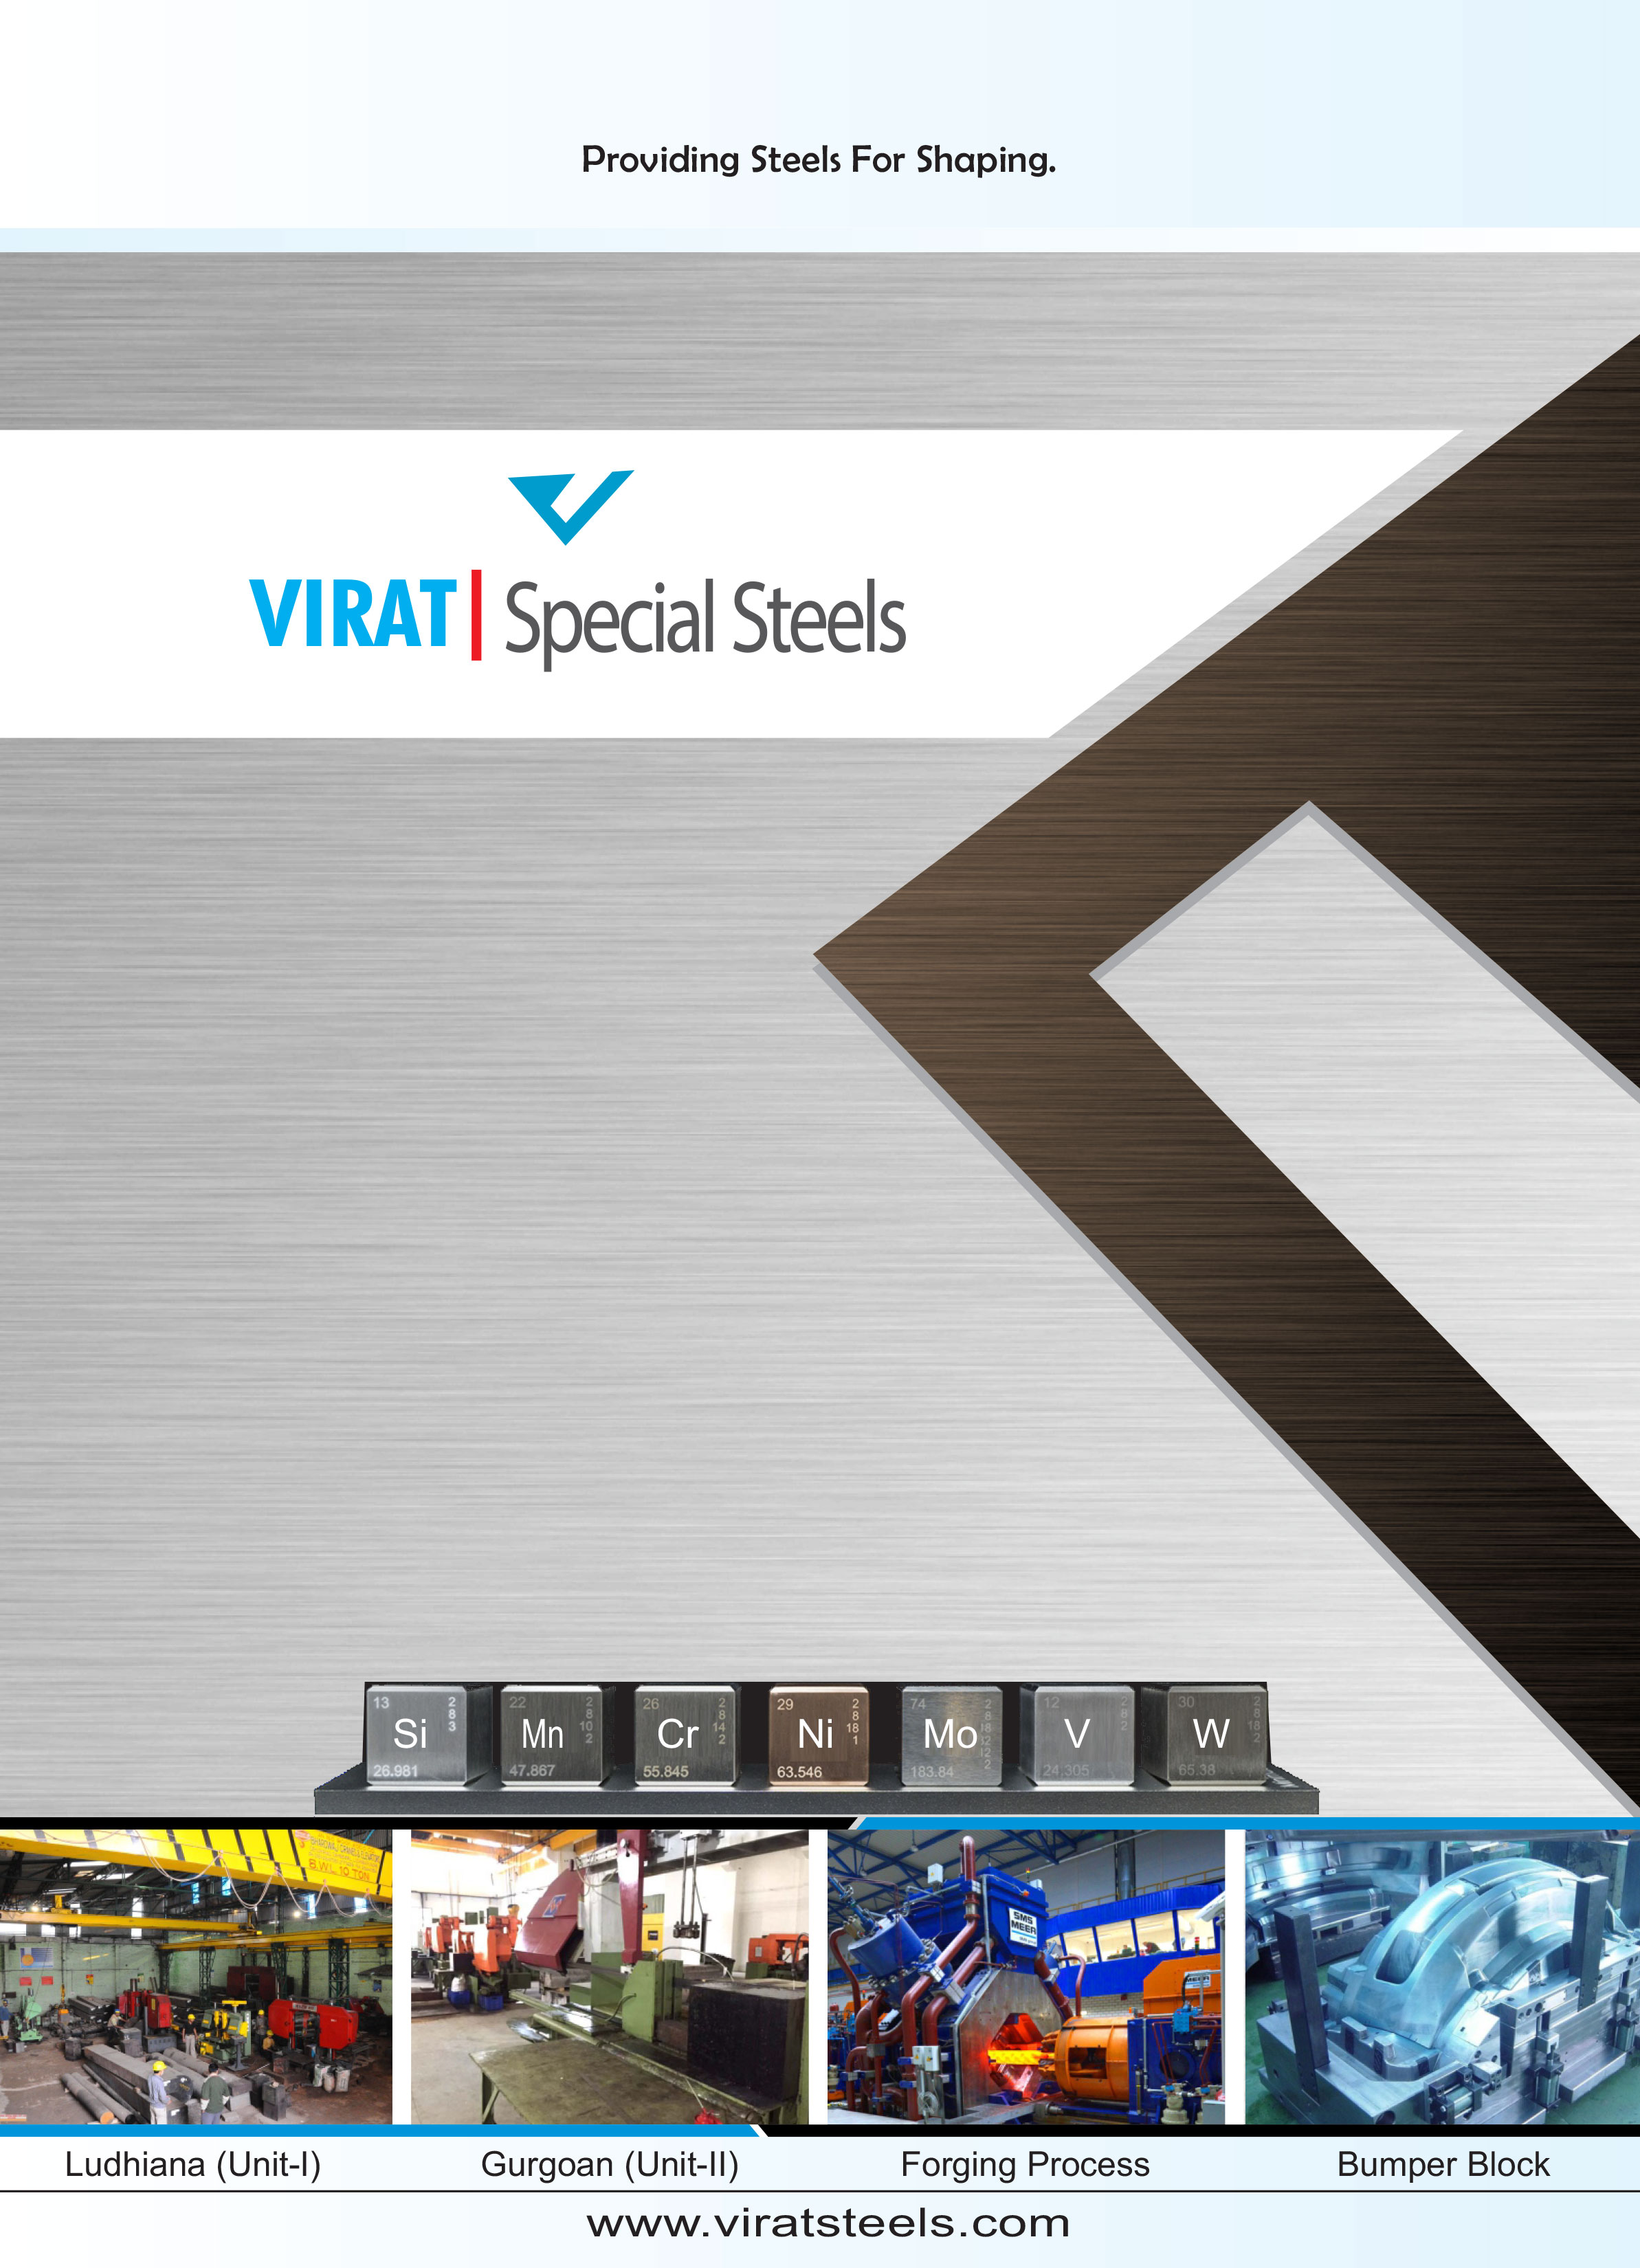 Virat Steels